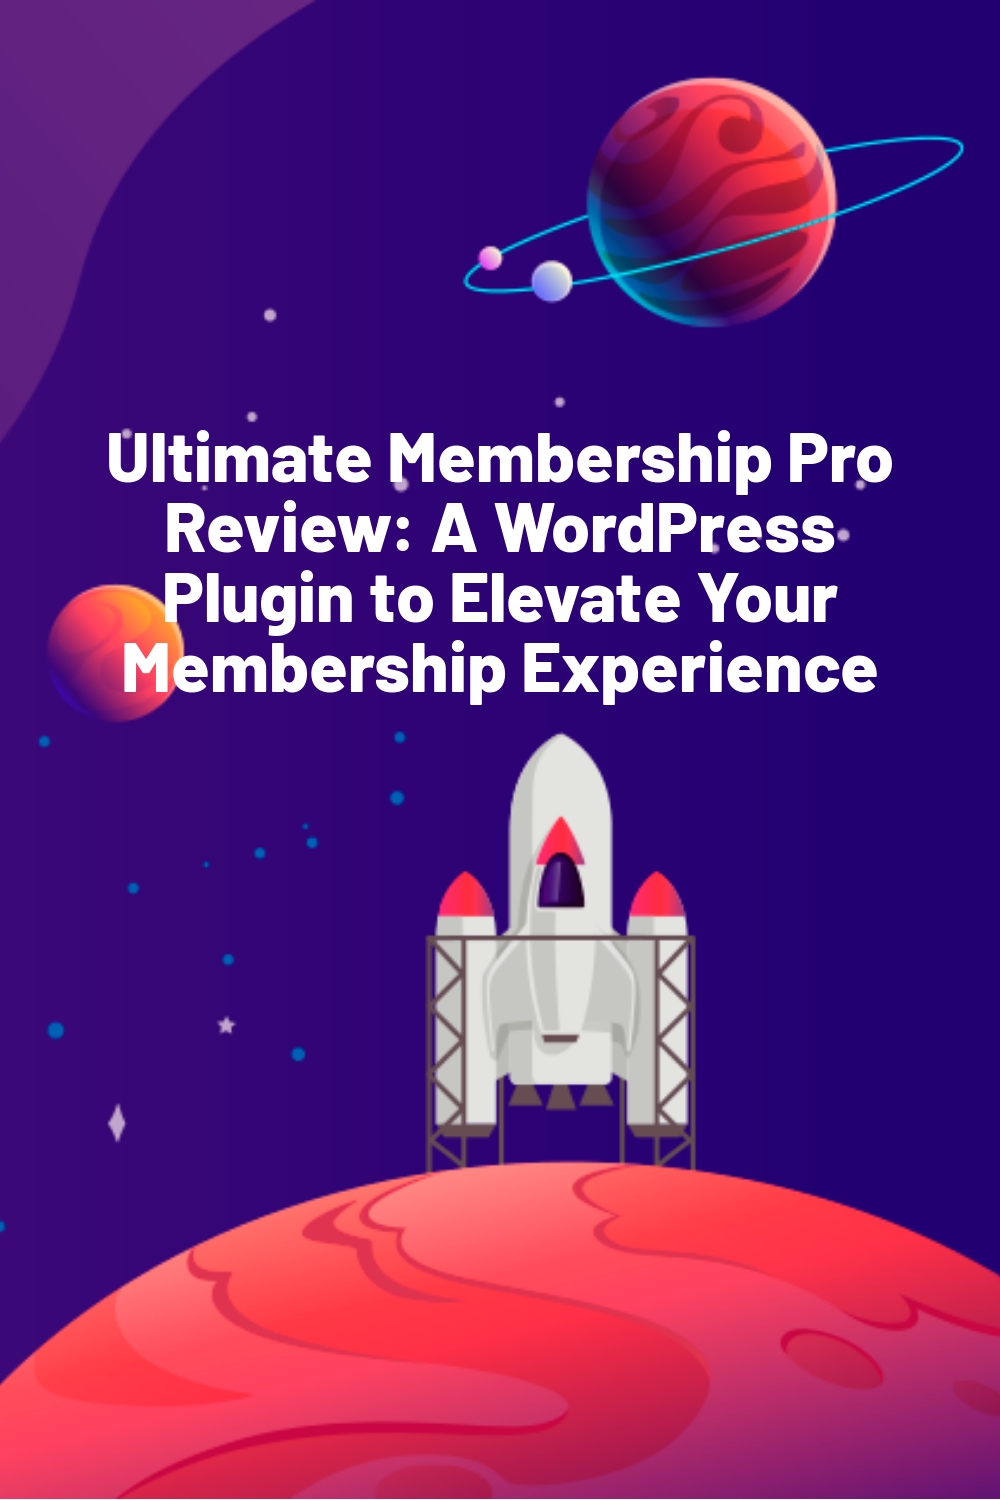 Ultimate Membership Pro Review: A WordPress Plugin to Elevate Your Membership Experience